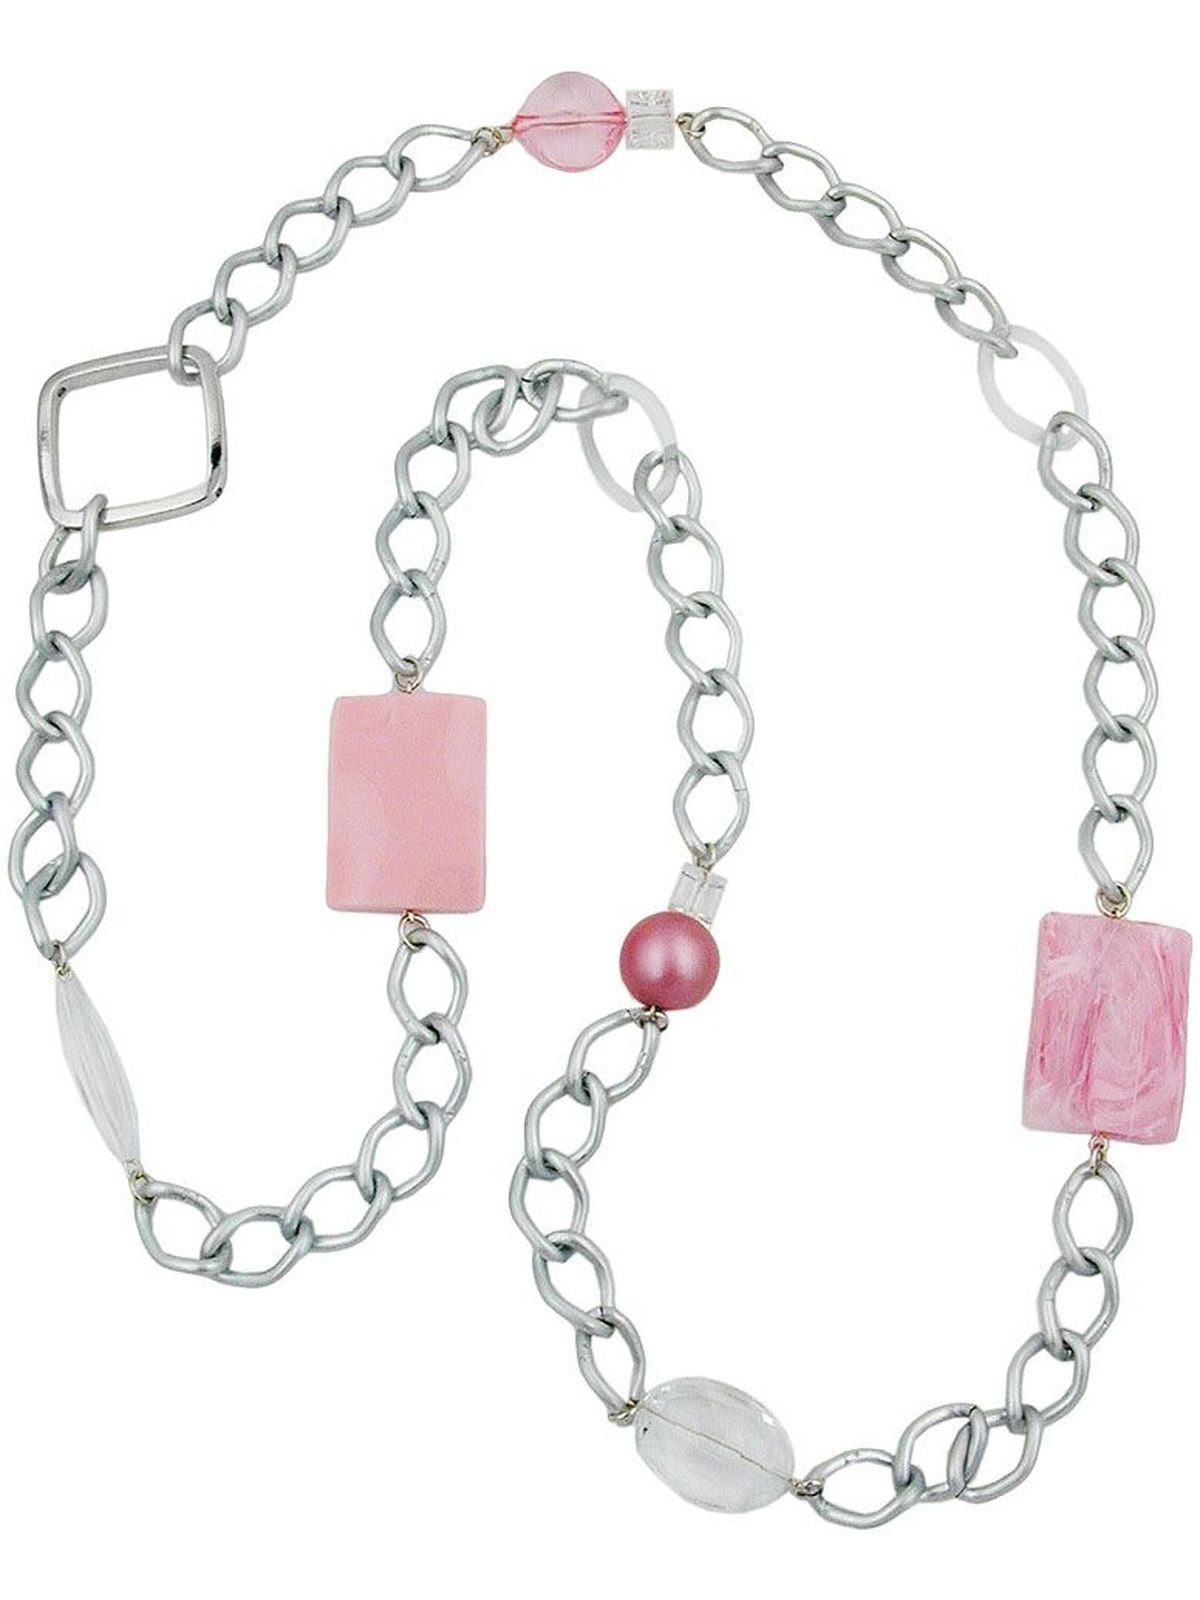 Gallay Perlenkette Kunststoffperlen rosa transparent Weitpanzerkette Aluminium hellgrau 95cm